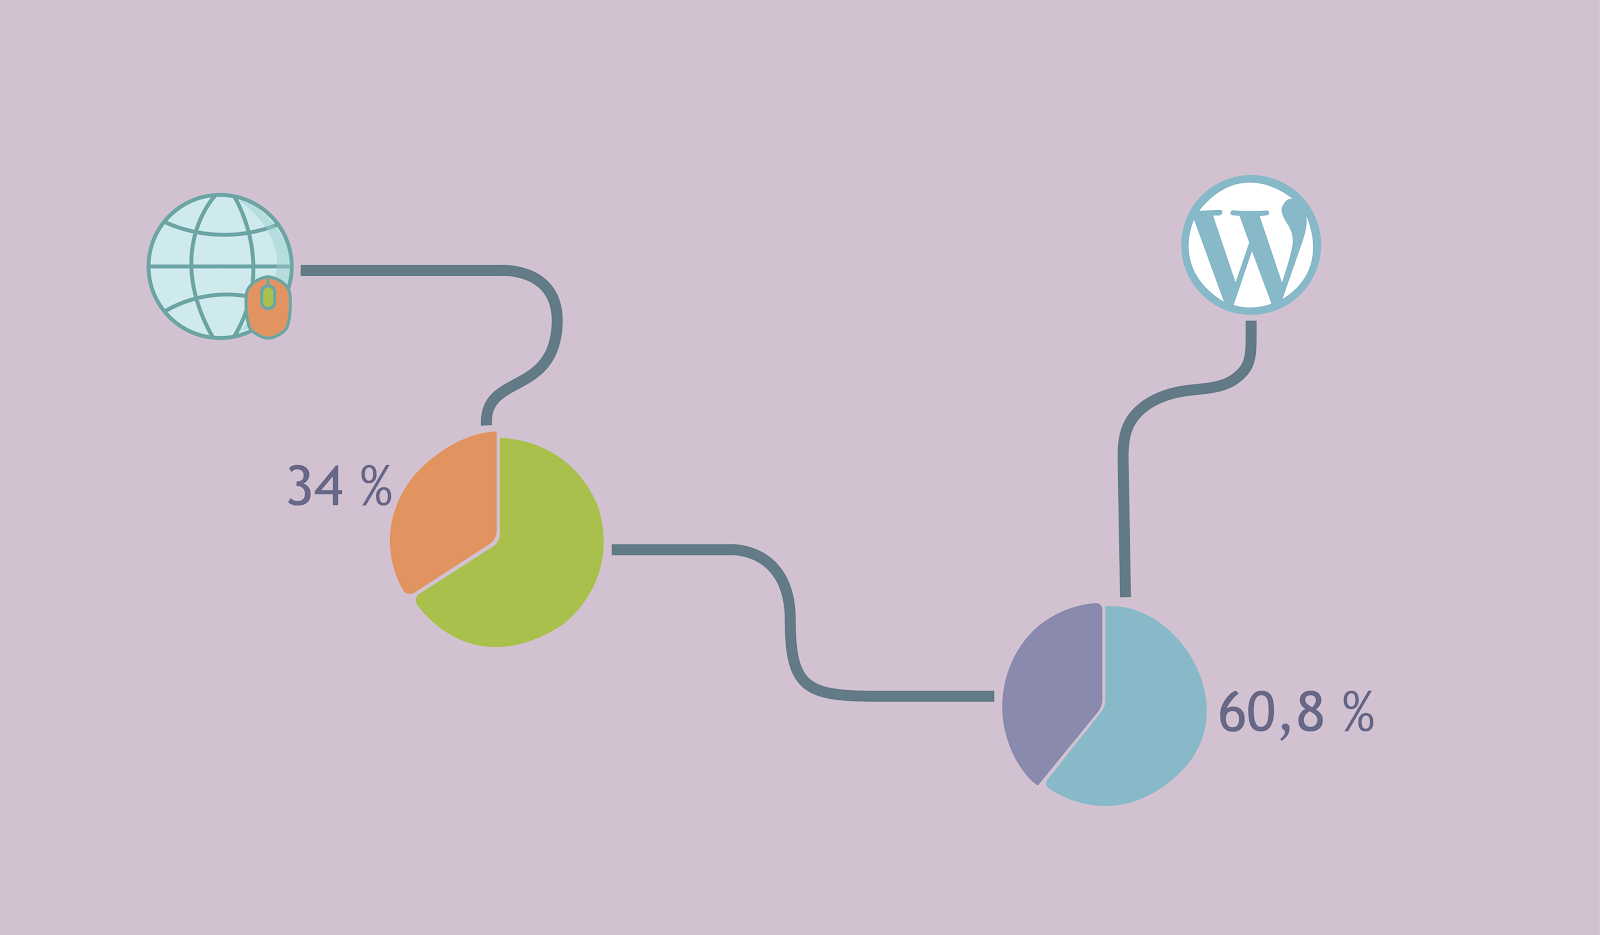 34% off all websites on the Internet user WordPress